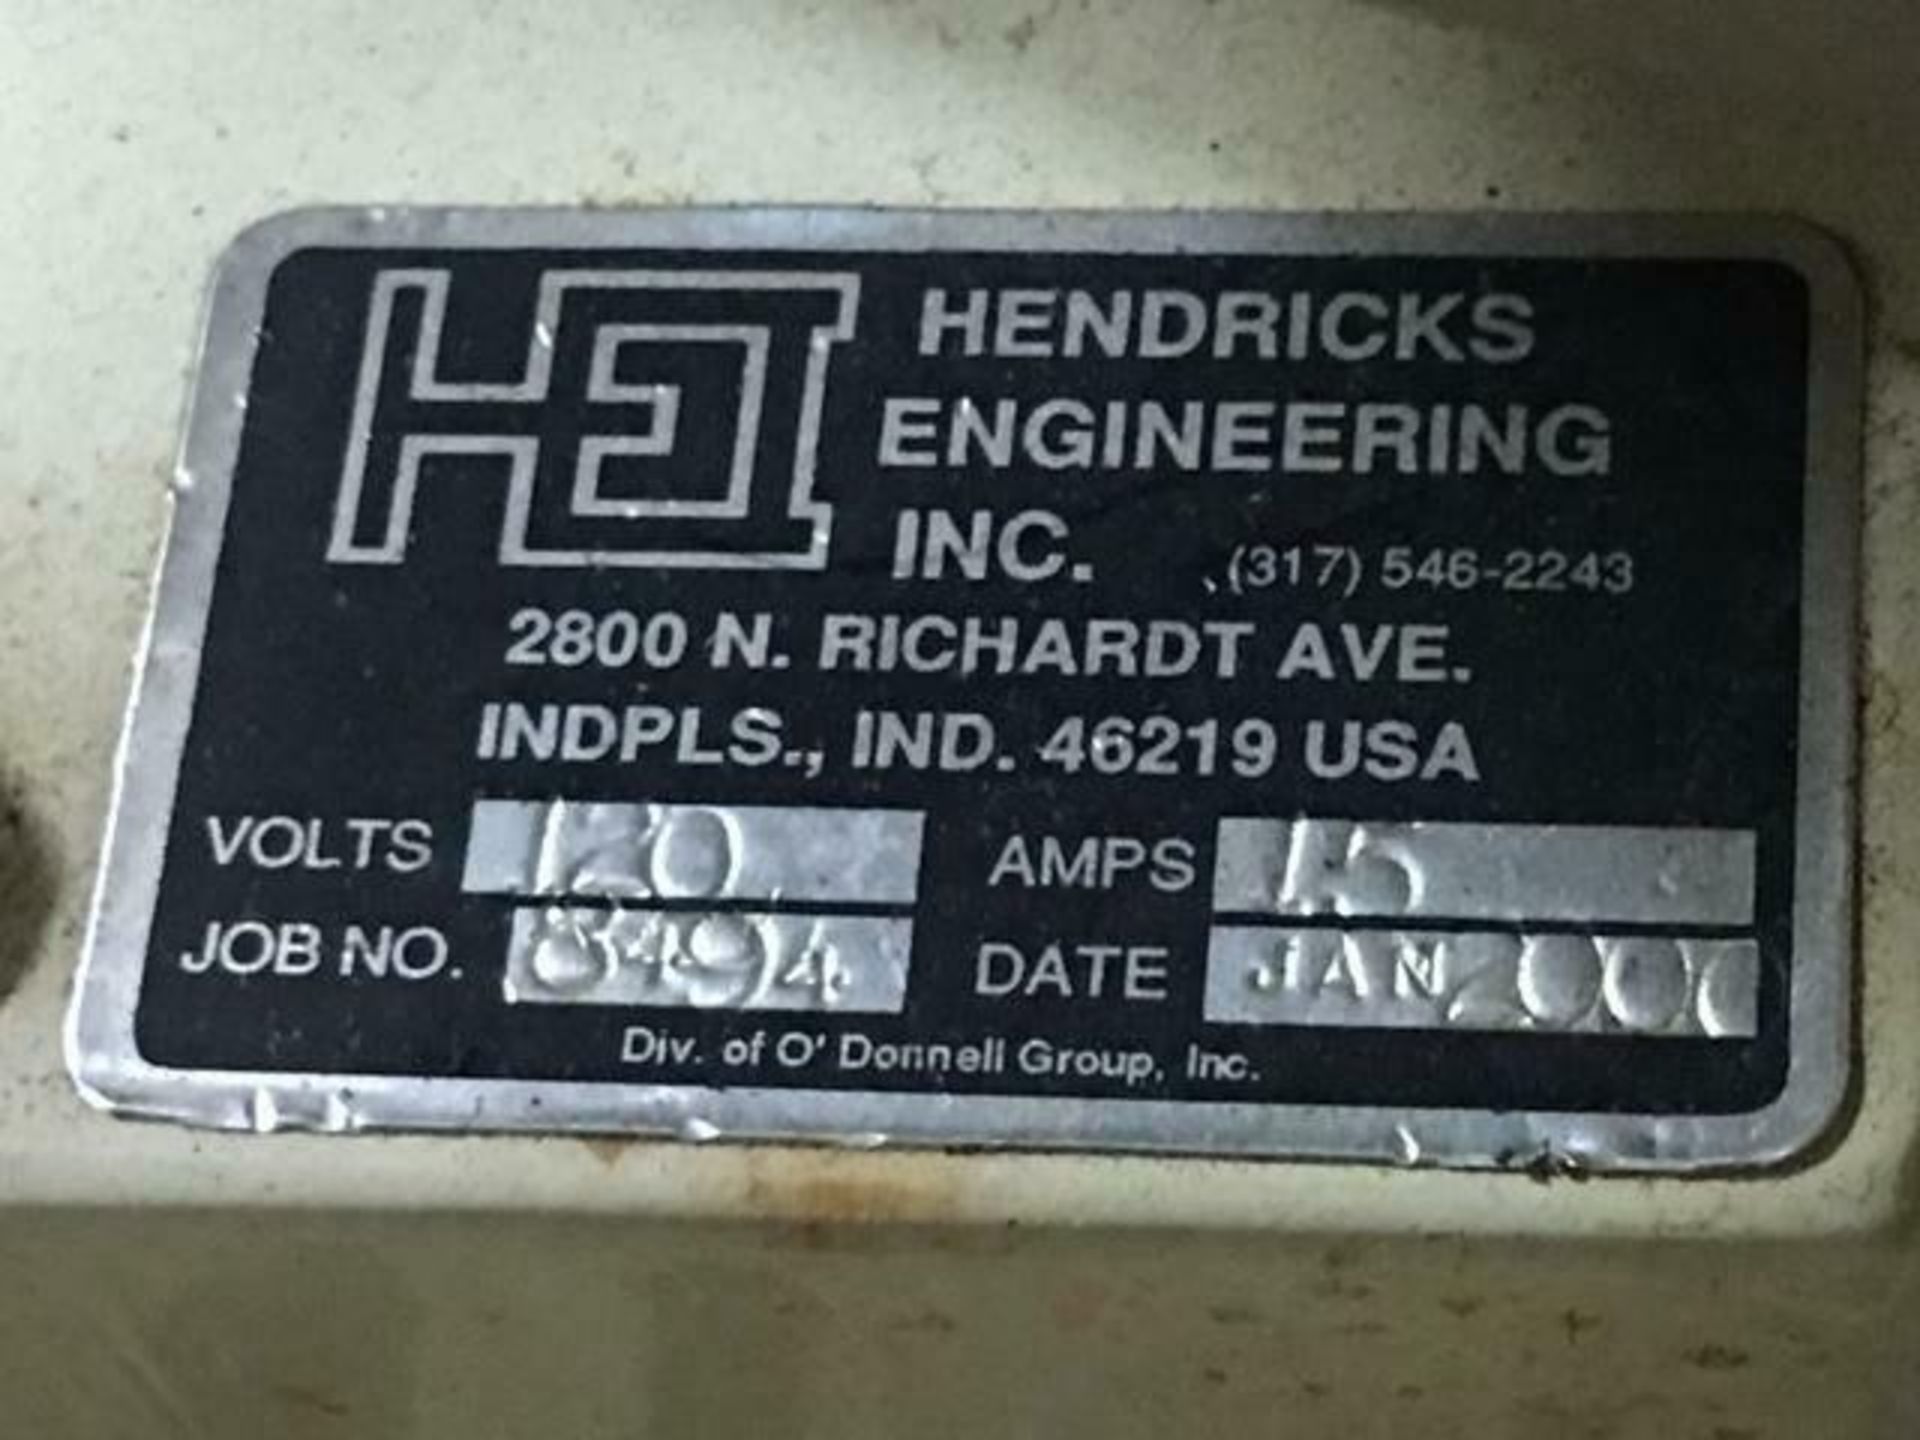 Hendricks Engr. Feeding System 8" Bowl Feeder, 110V, 1 Ph, NO CONTROLLER - Image 4 of 4